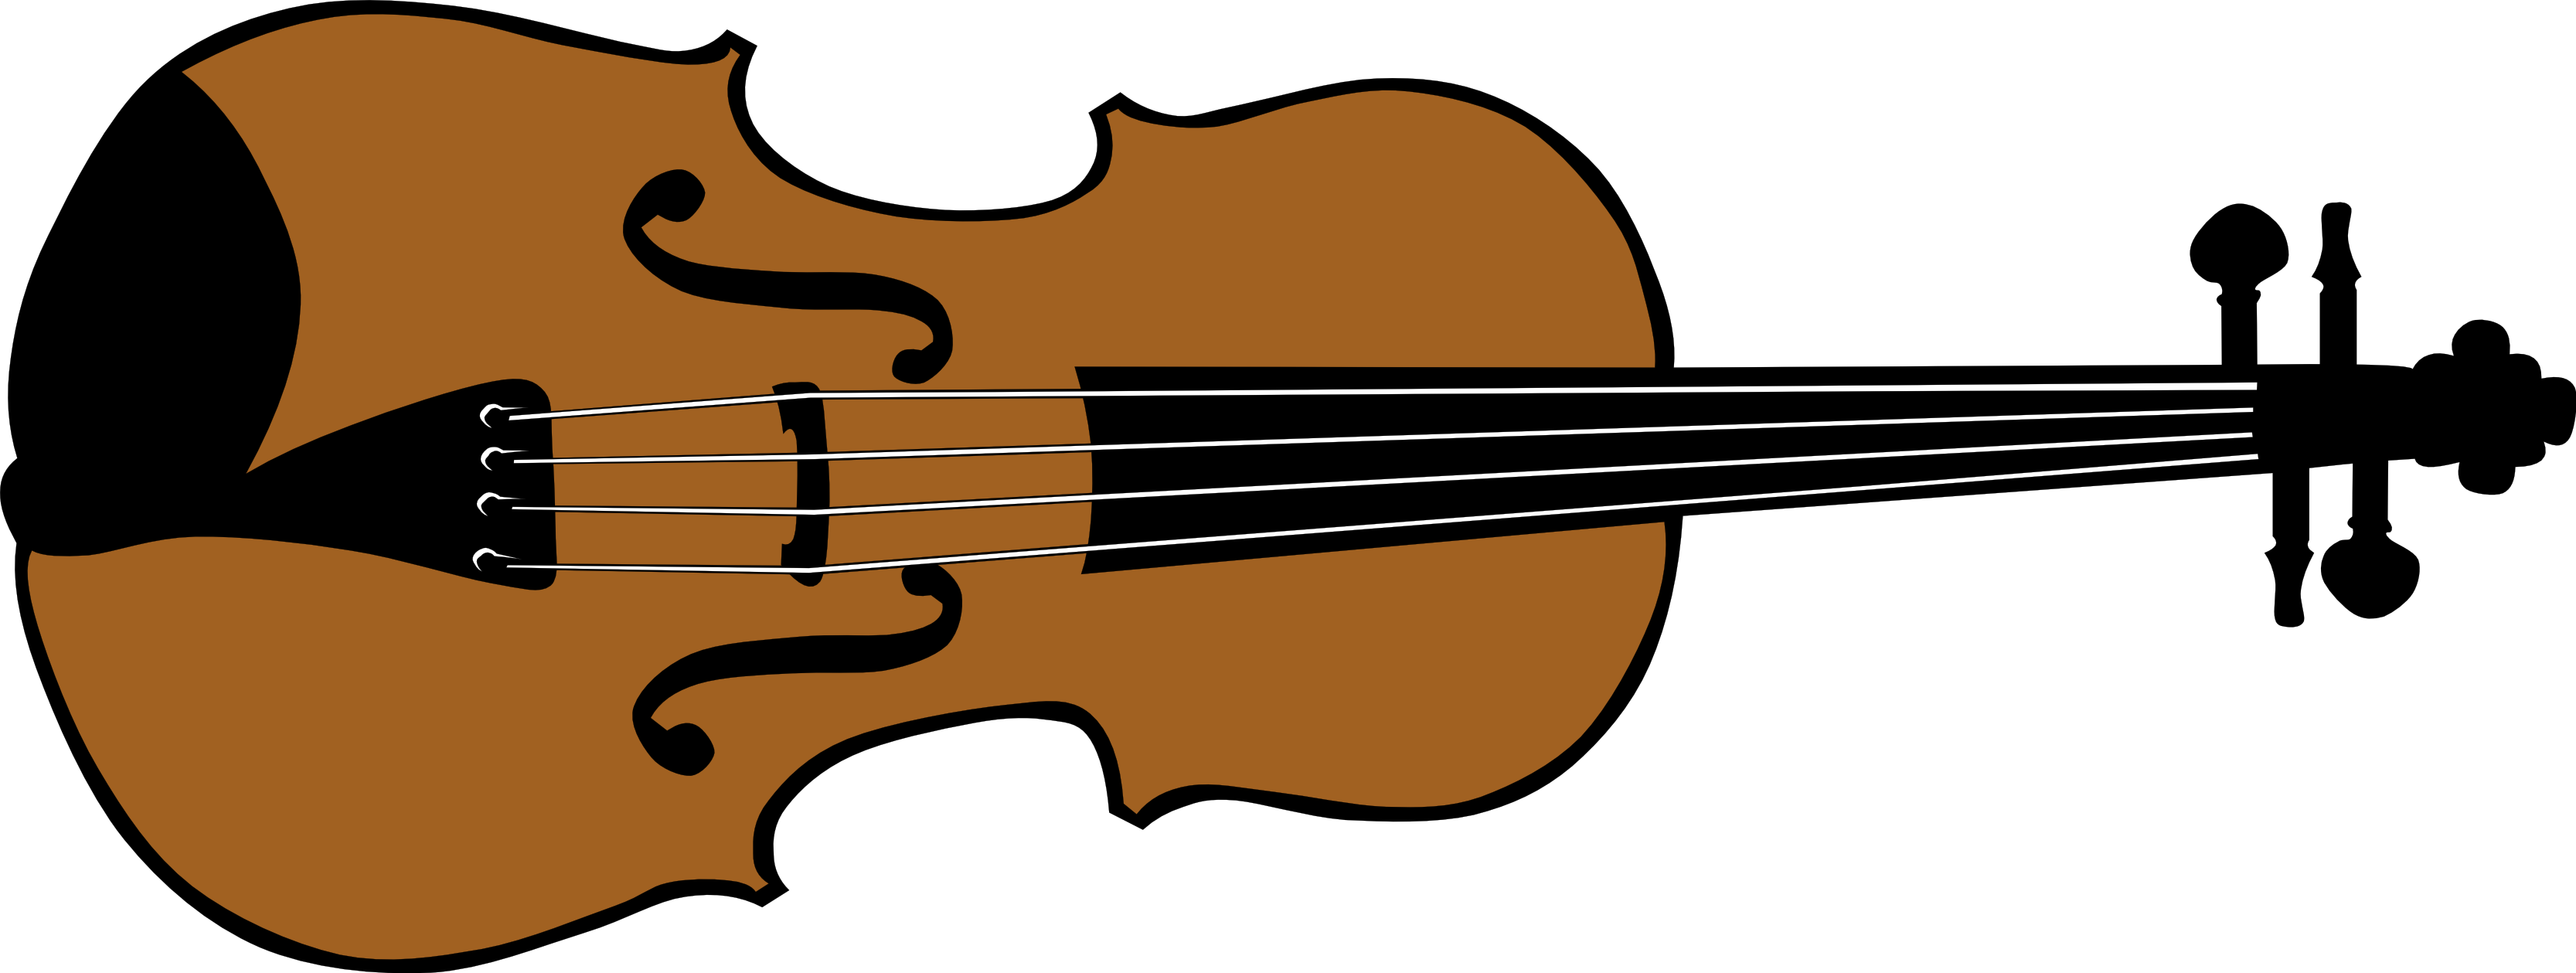 Cartoon violin clipart